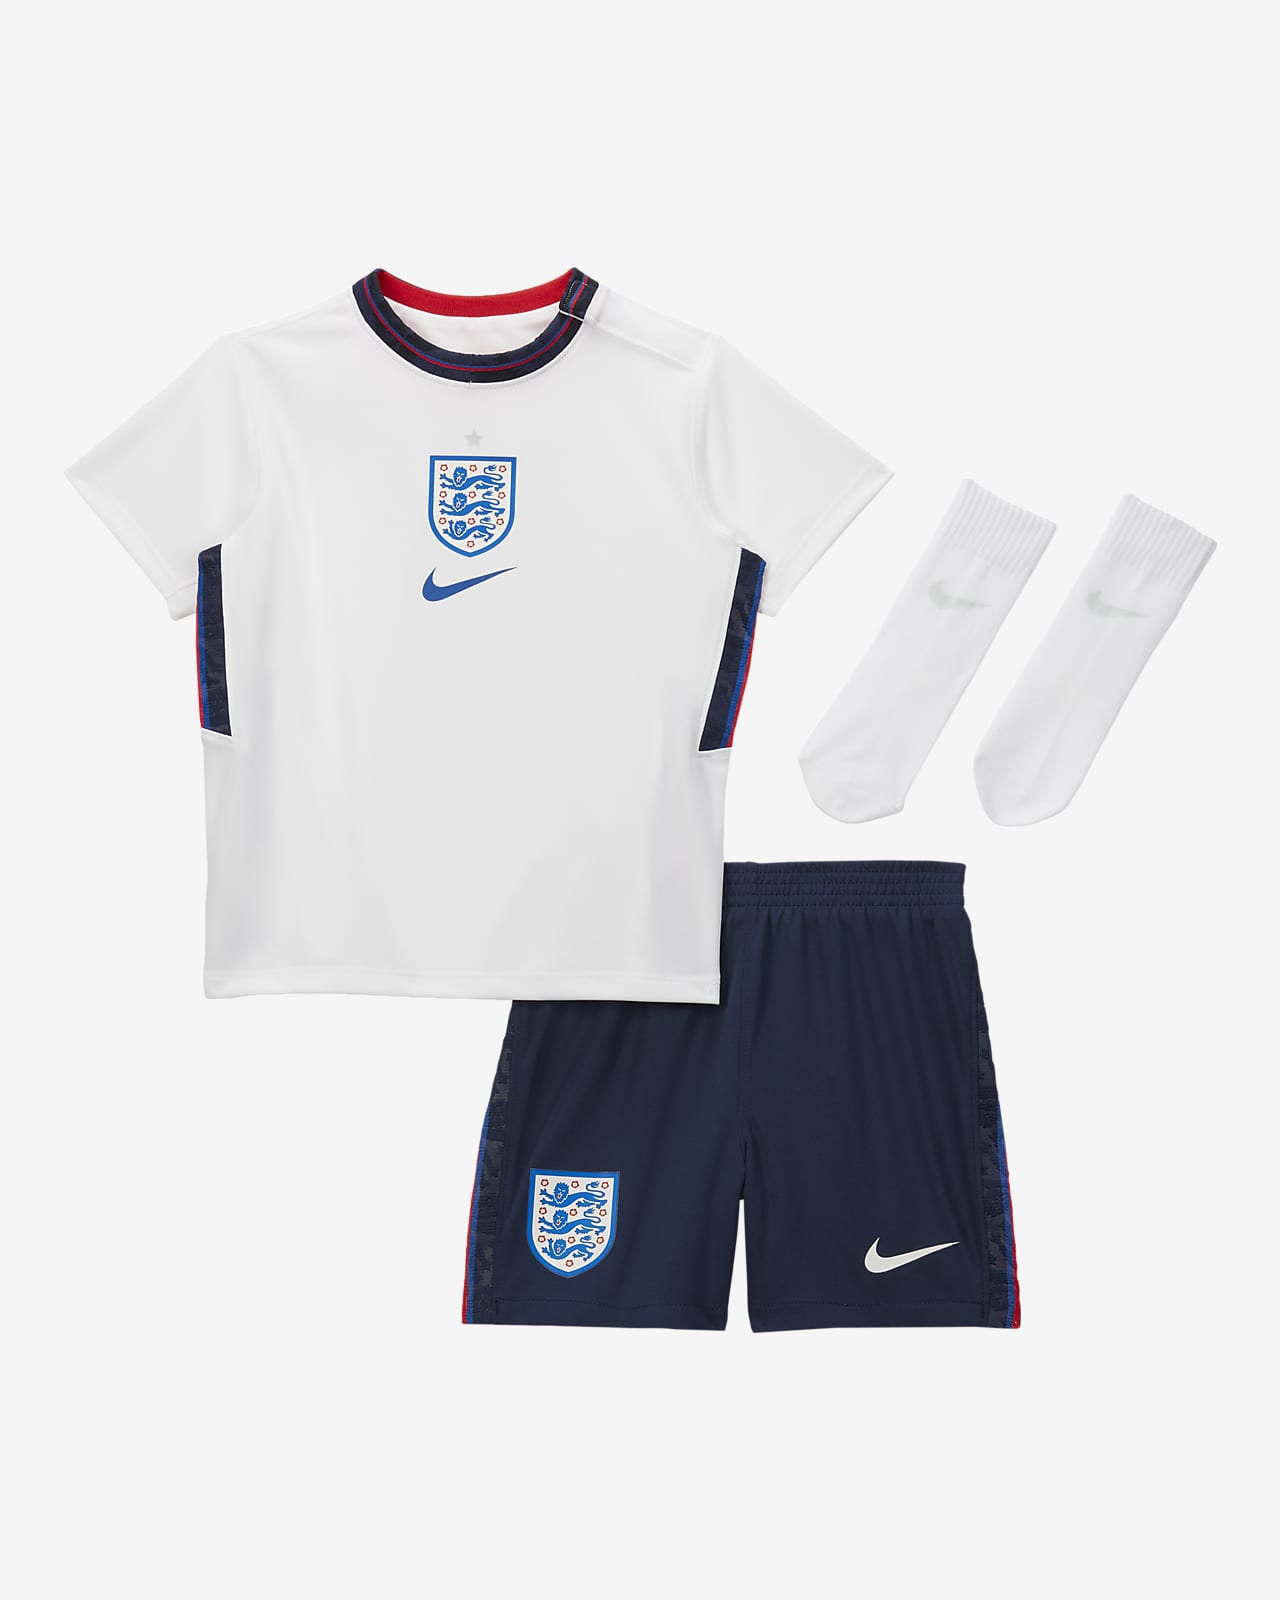 england kit 2020